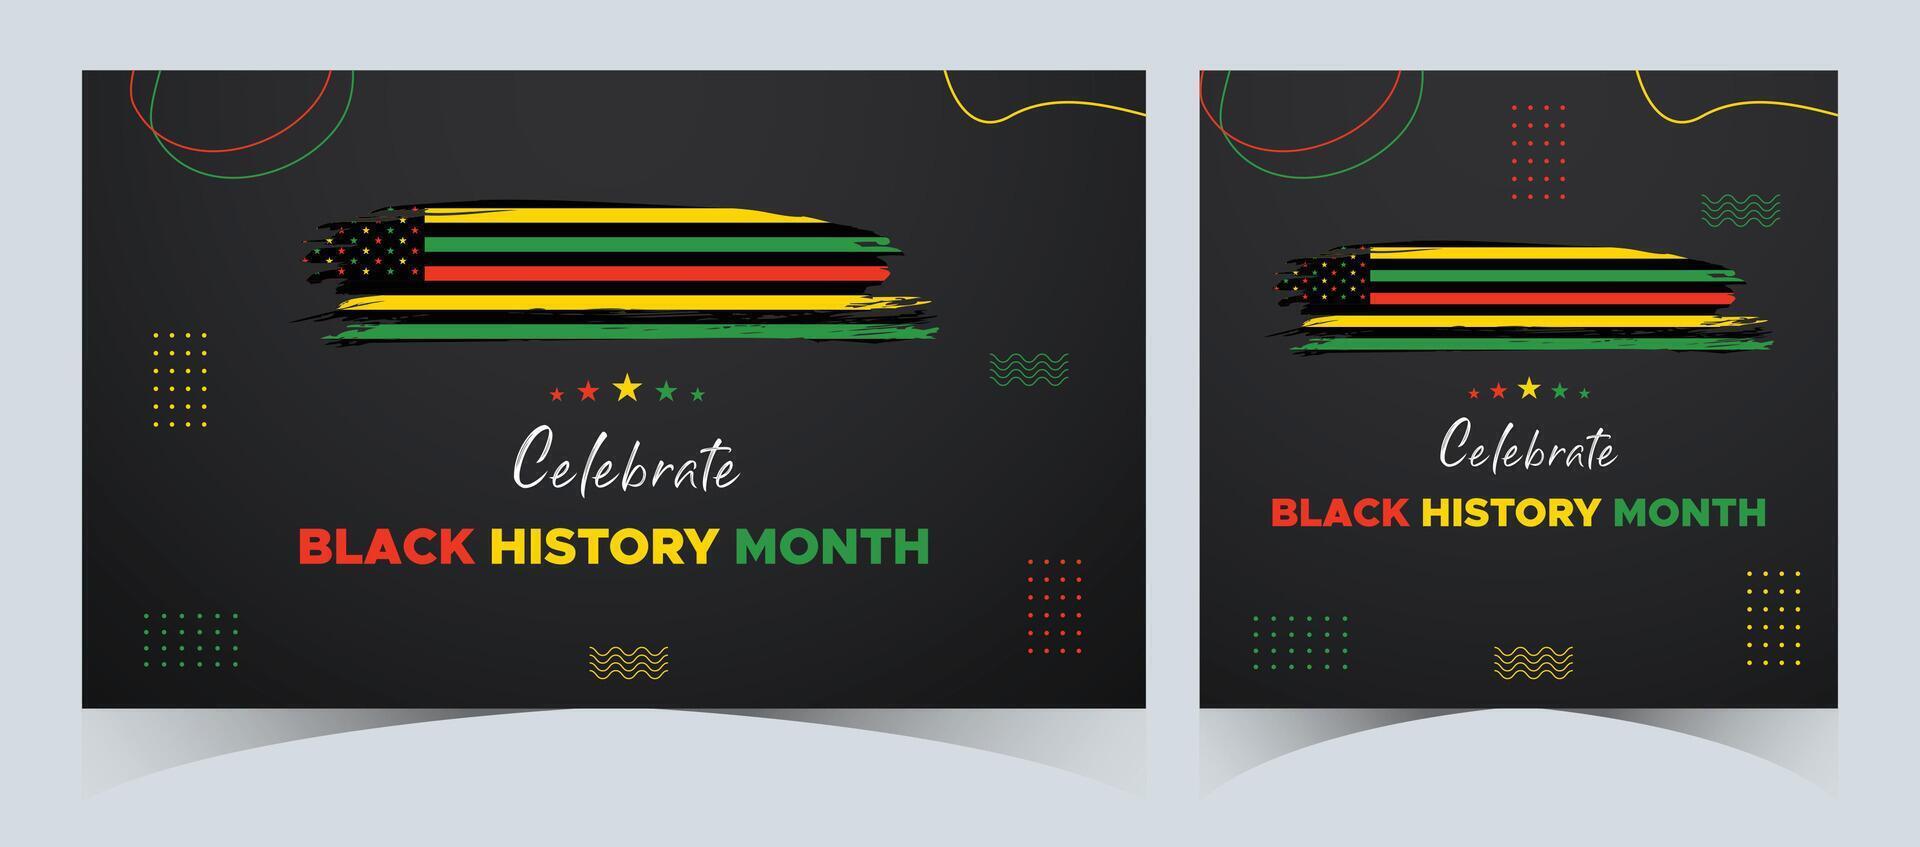 conjunto de negro historia mes celebrado. febrero nacional negro historia mes africano americano vector ilustración modelo para fondo, bandera, tarjeta, póster con texto inscripción